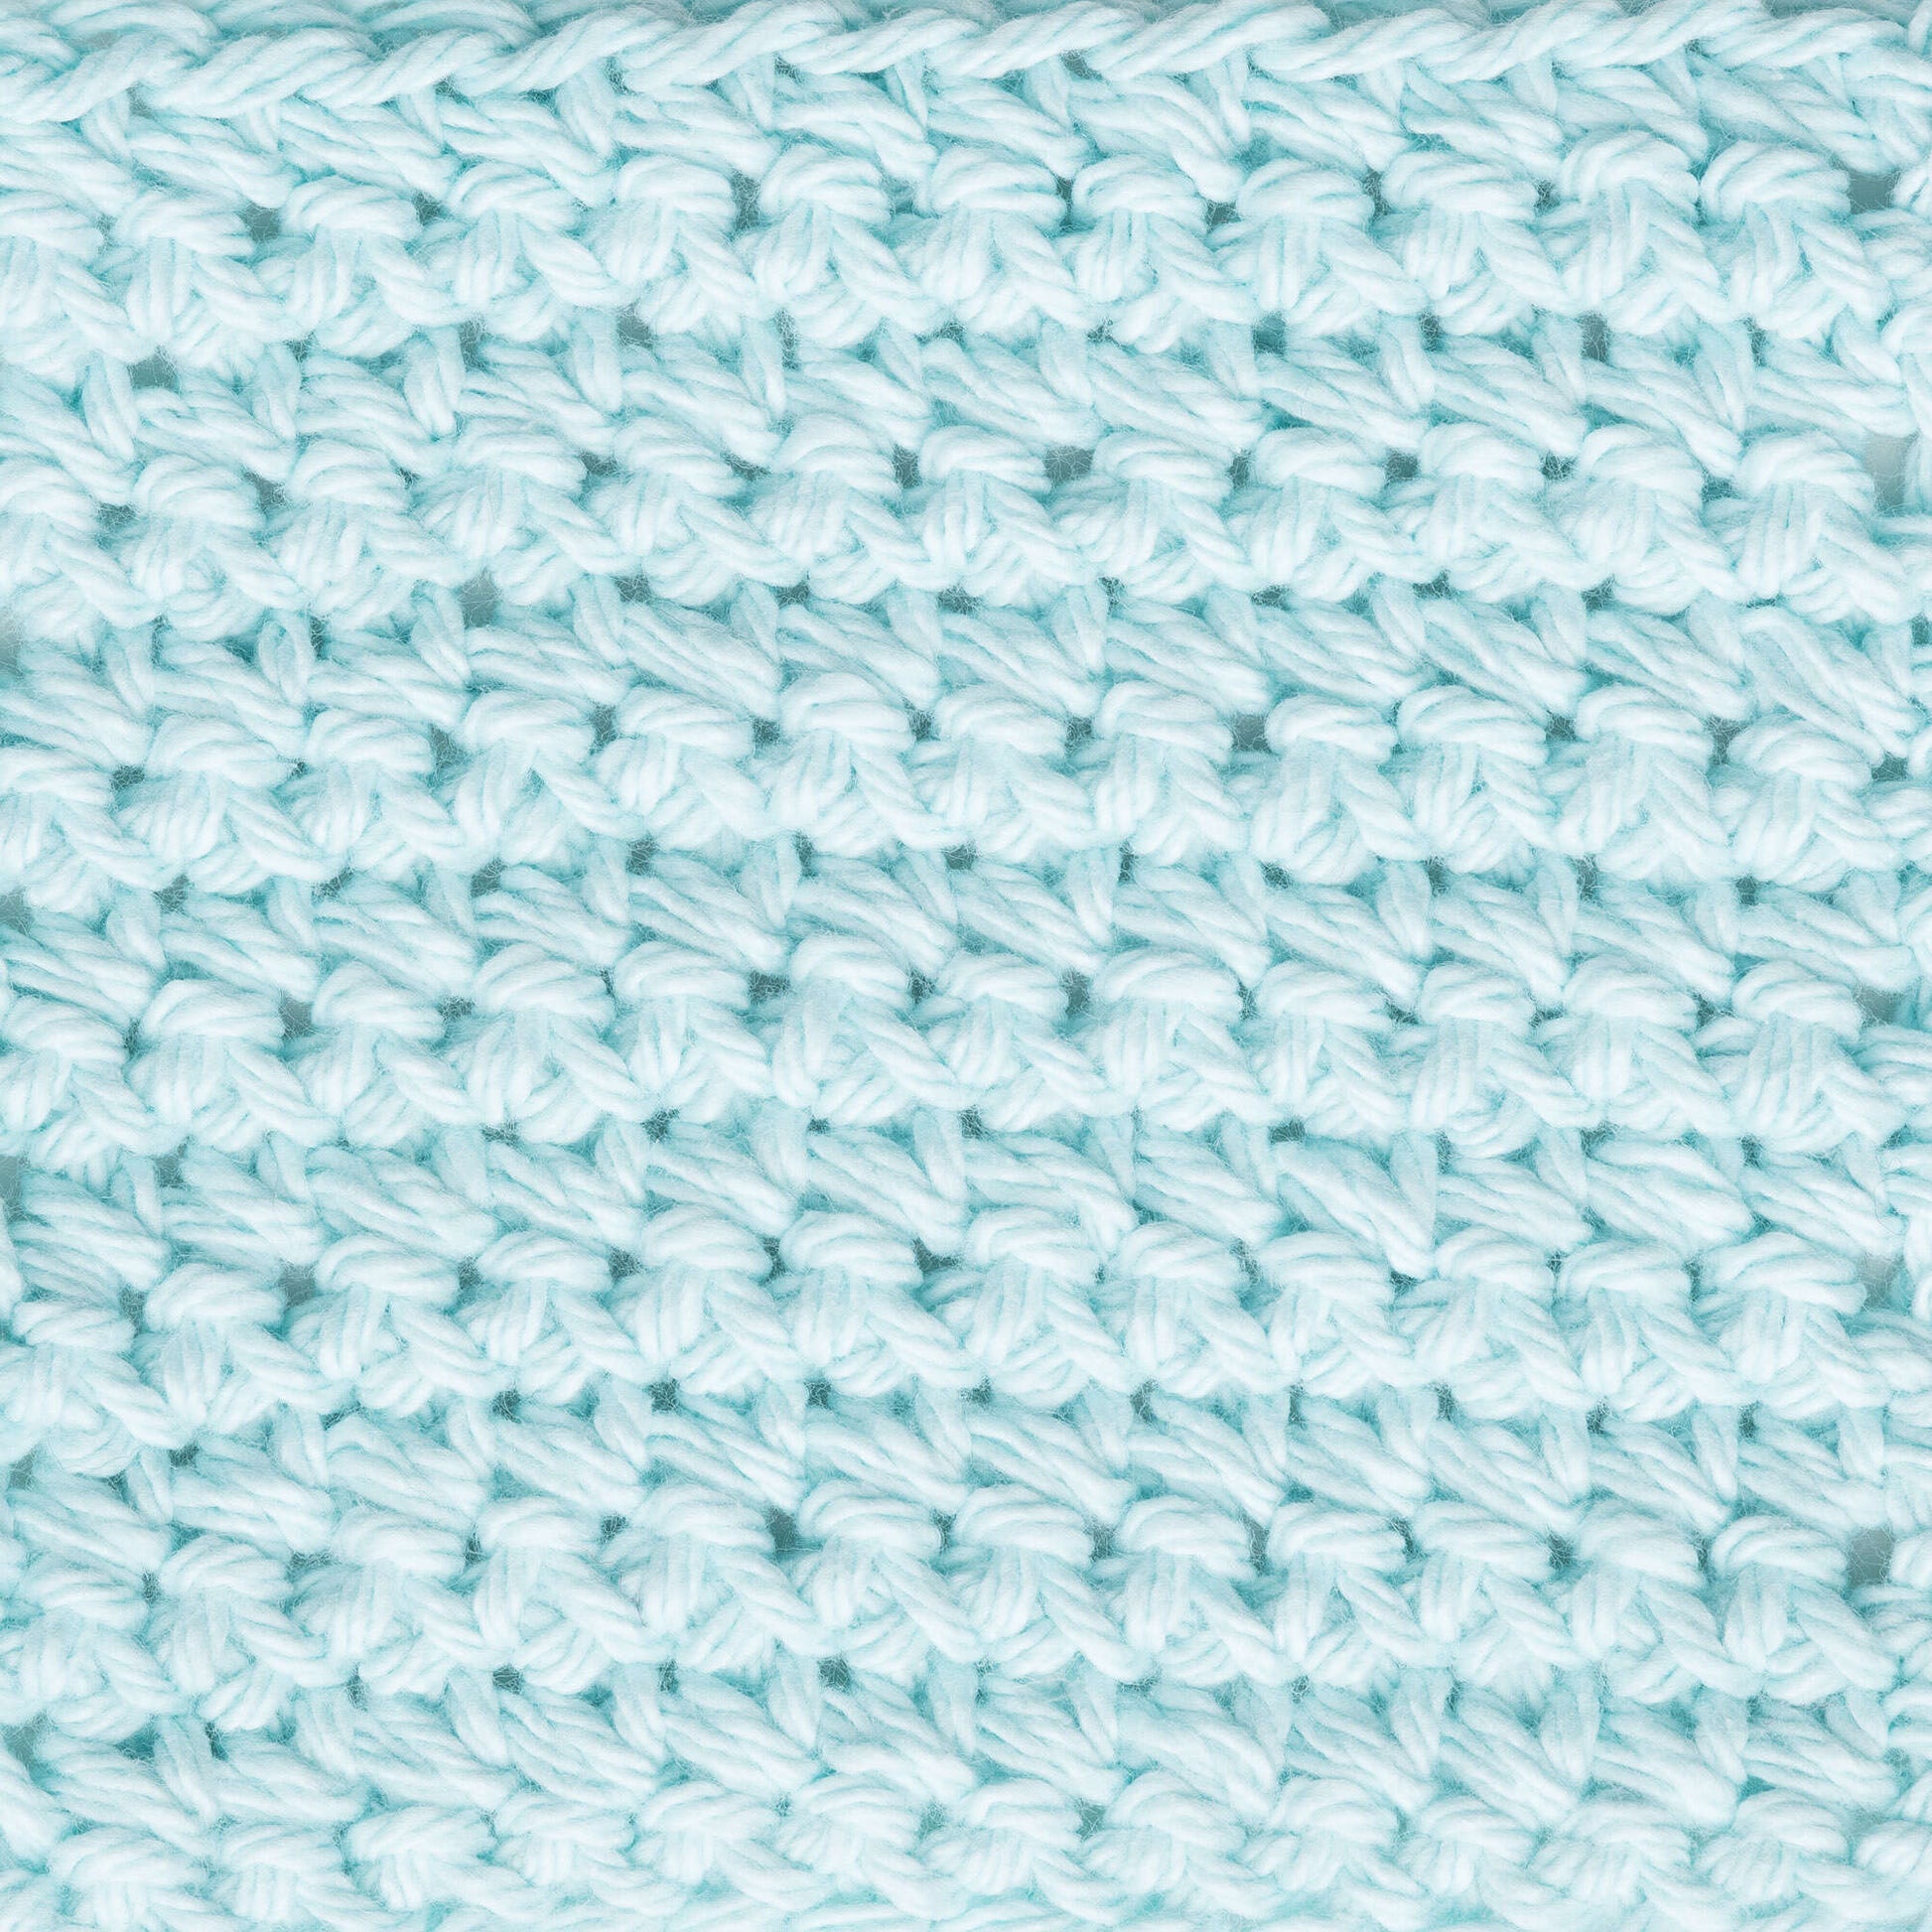 Bernat Handicrafter Cotton Yarn (400g/14oz) - Discontinued Shades